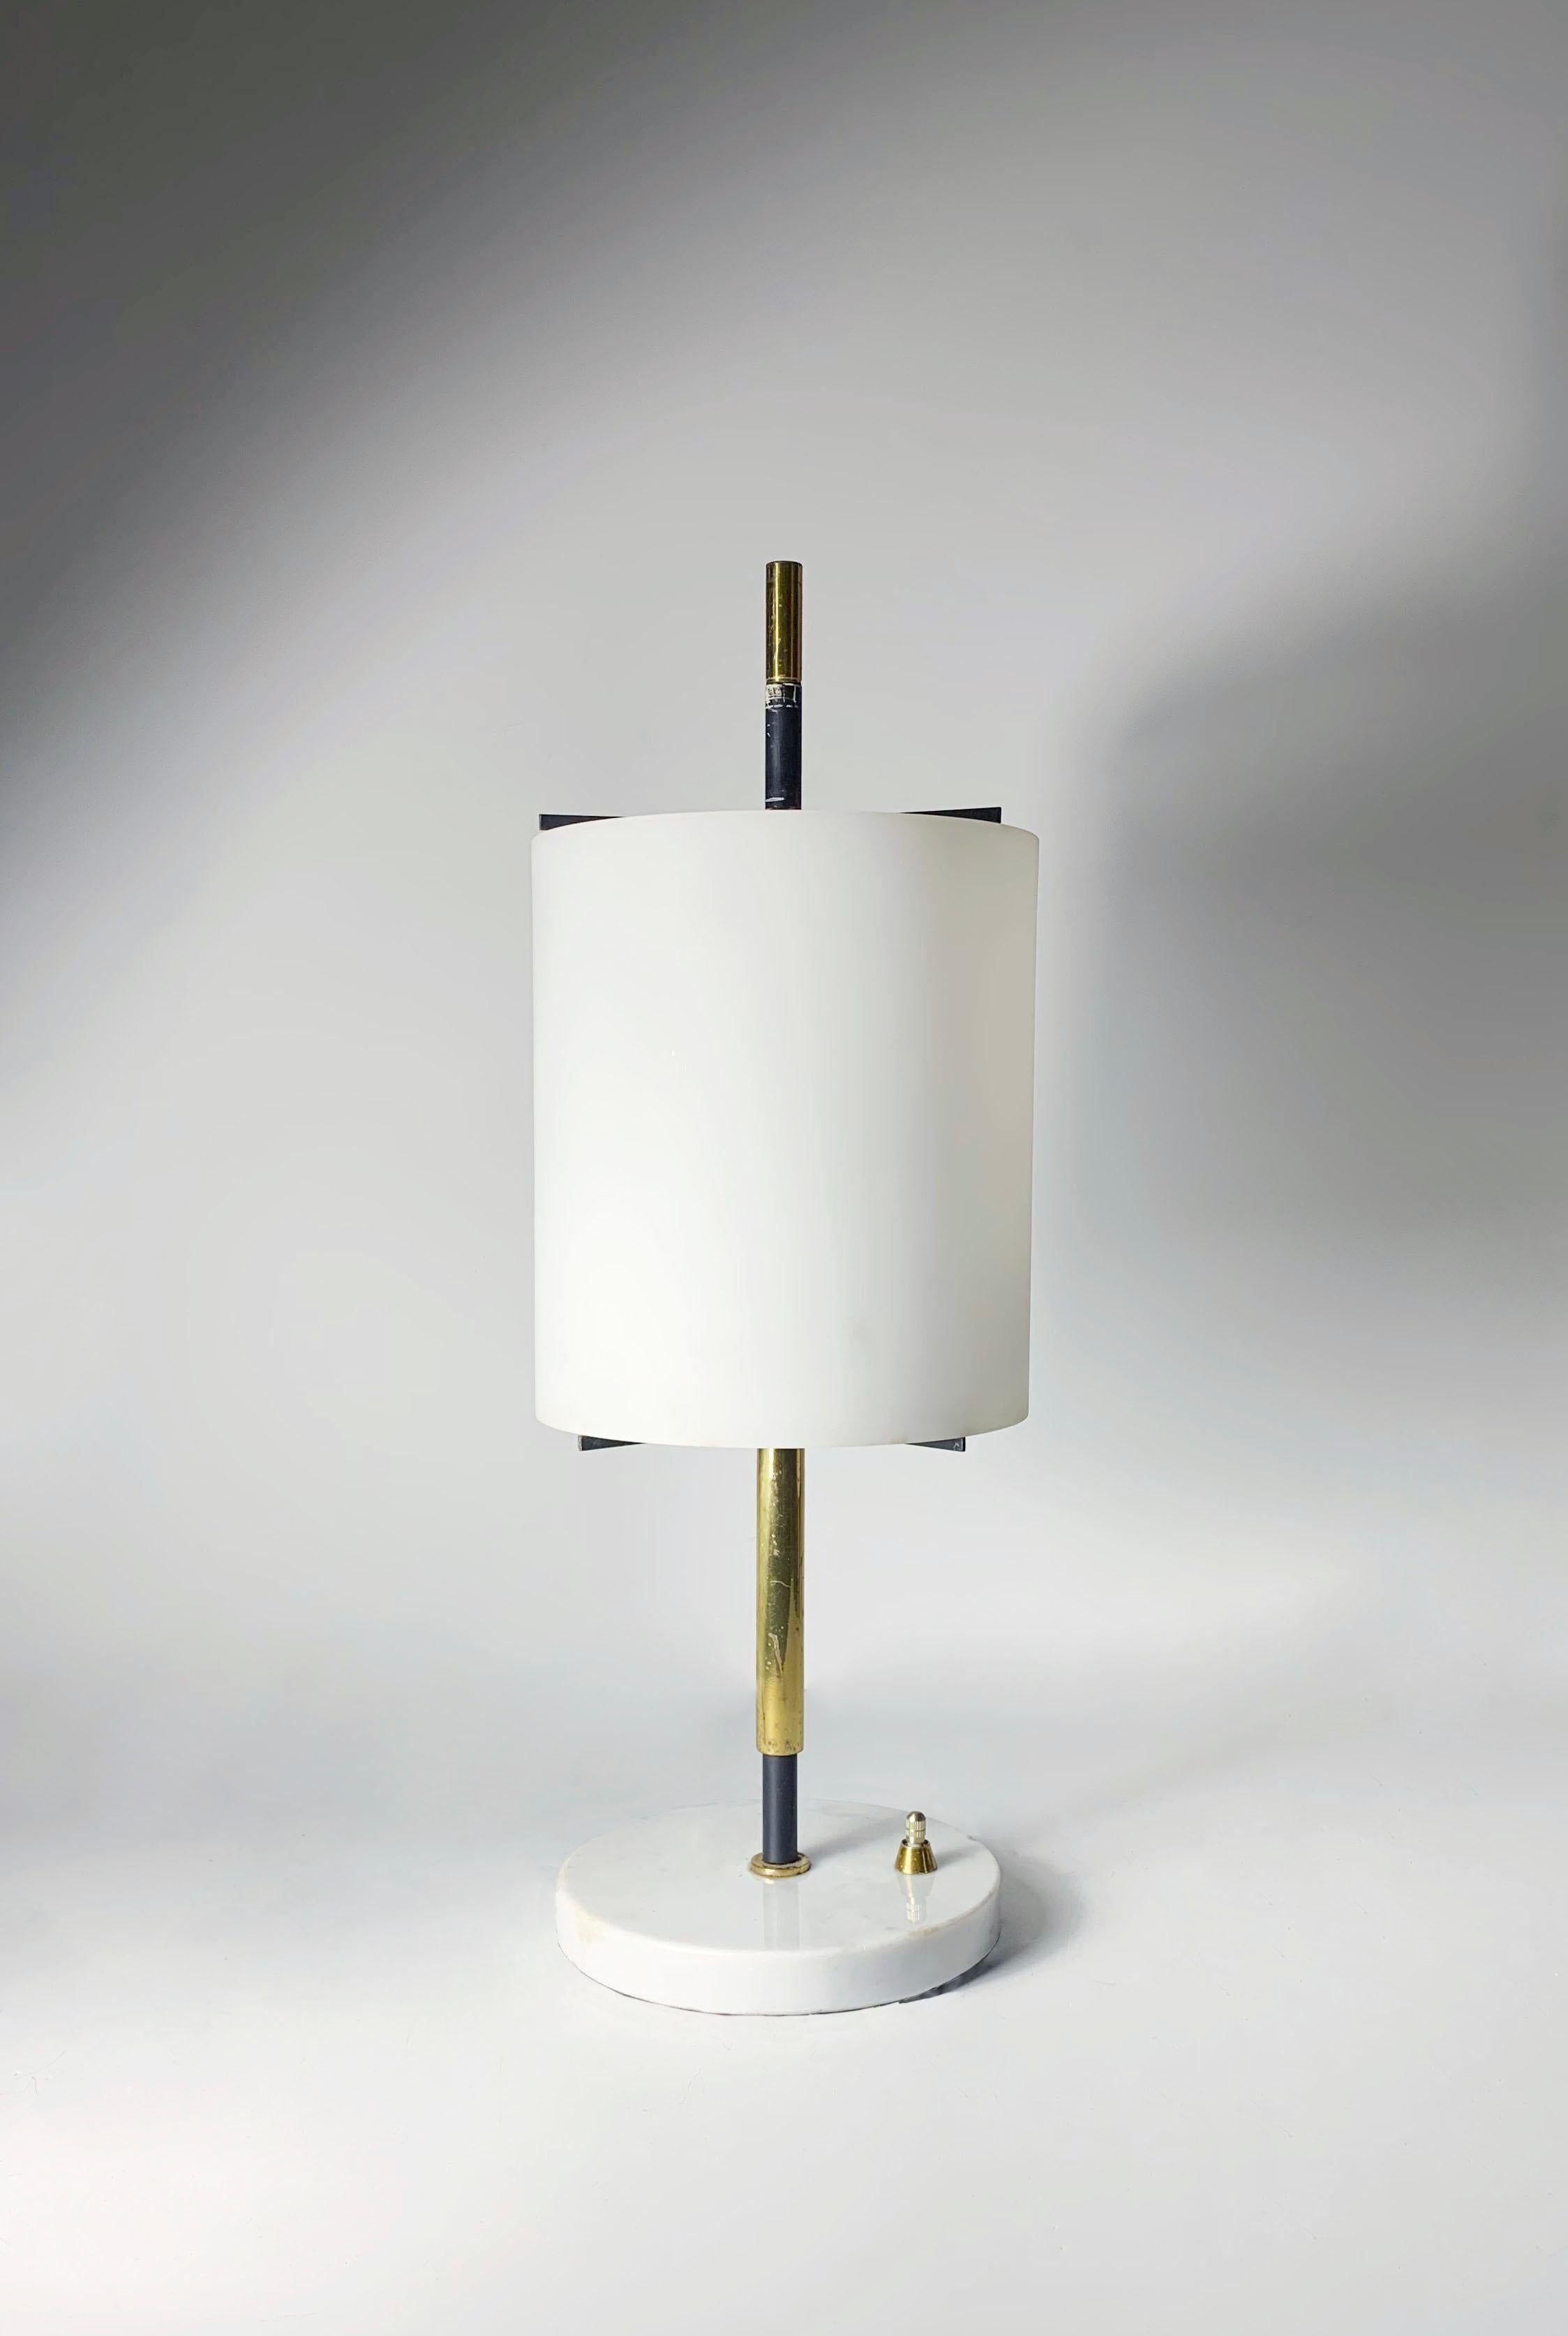 Rare Italian Lamp by Stilux Milano

In the manner of Arredoluce , Gino Sarfatti